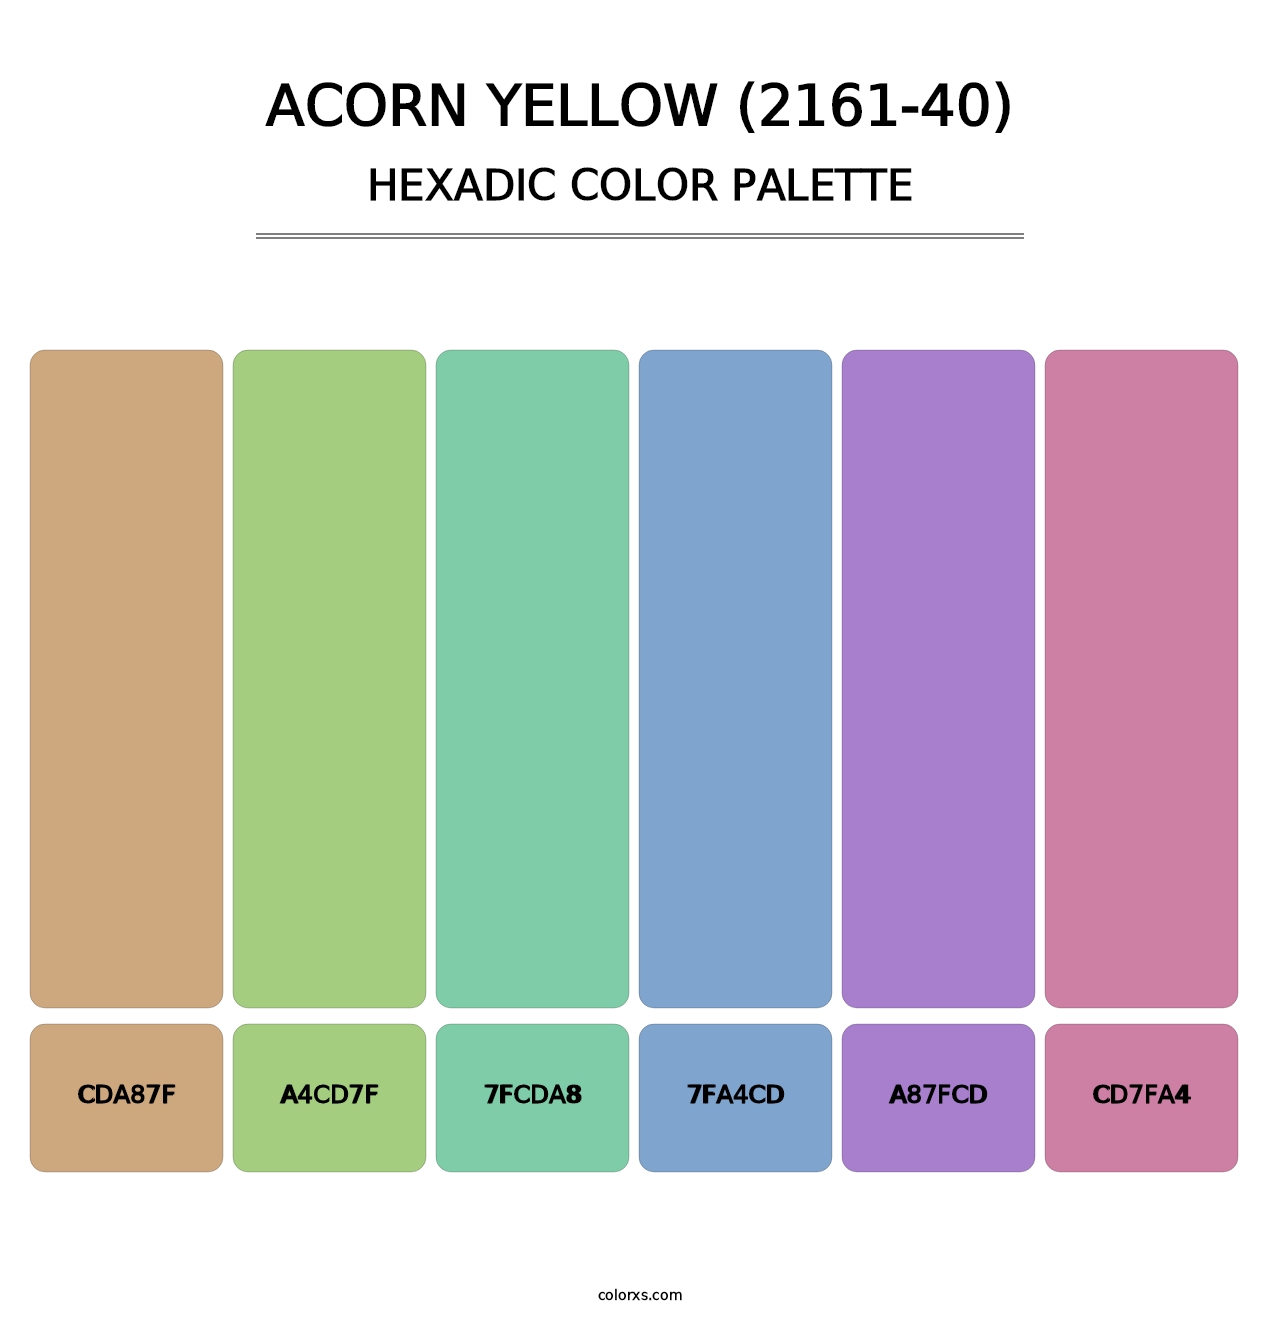 Acorn Yellow (2161-40) - Hexadic Color Palette